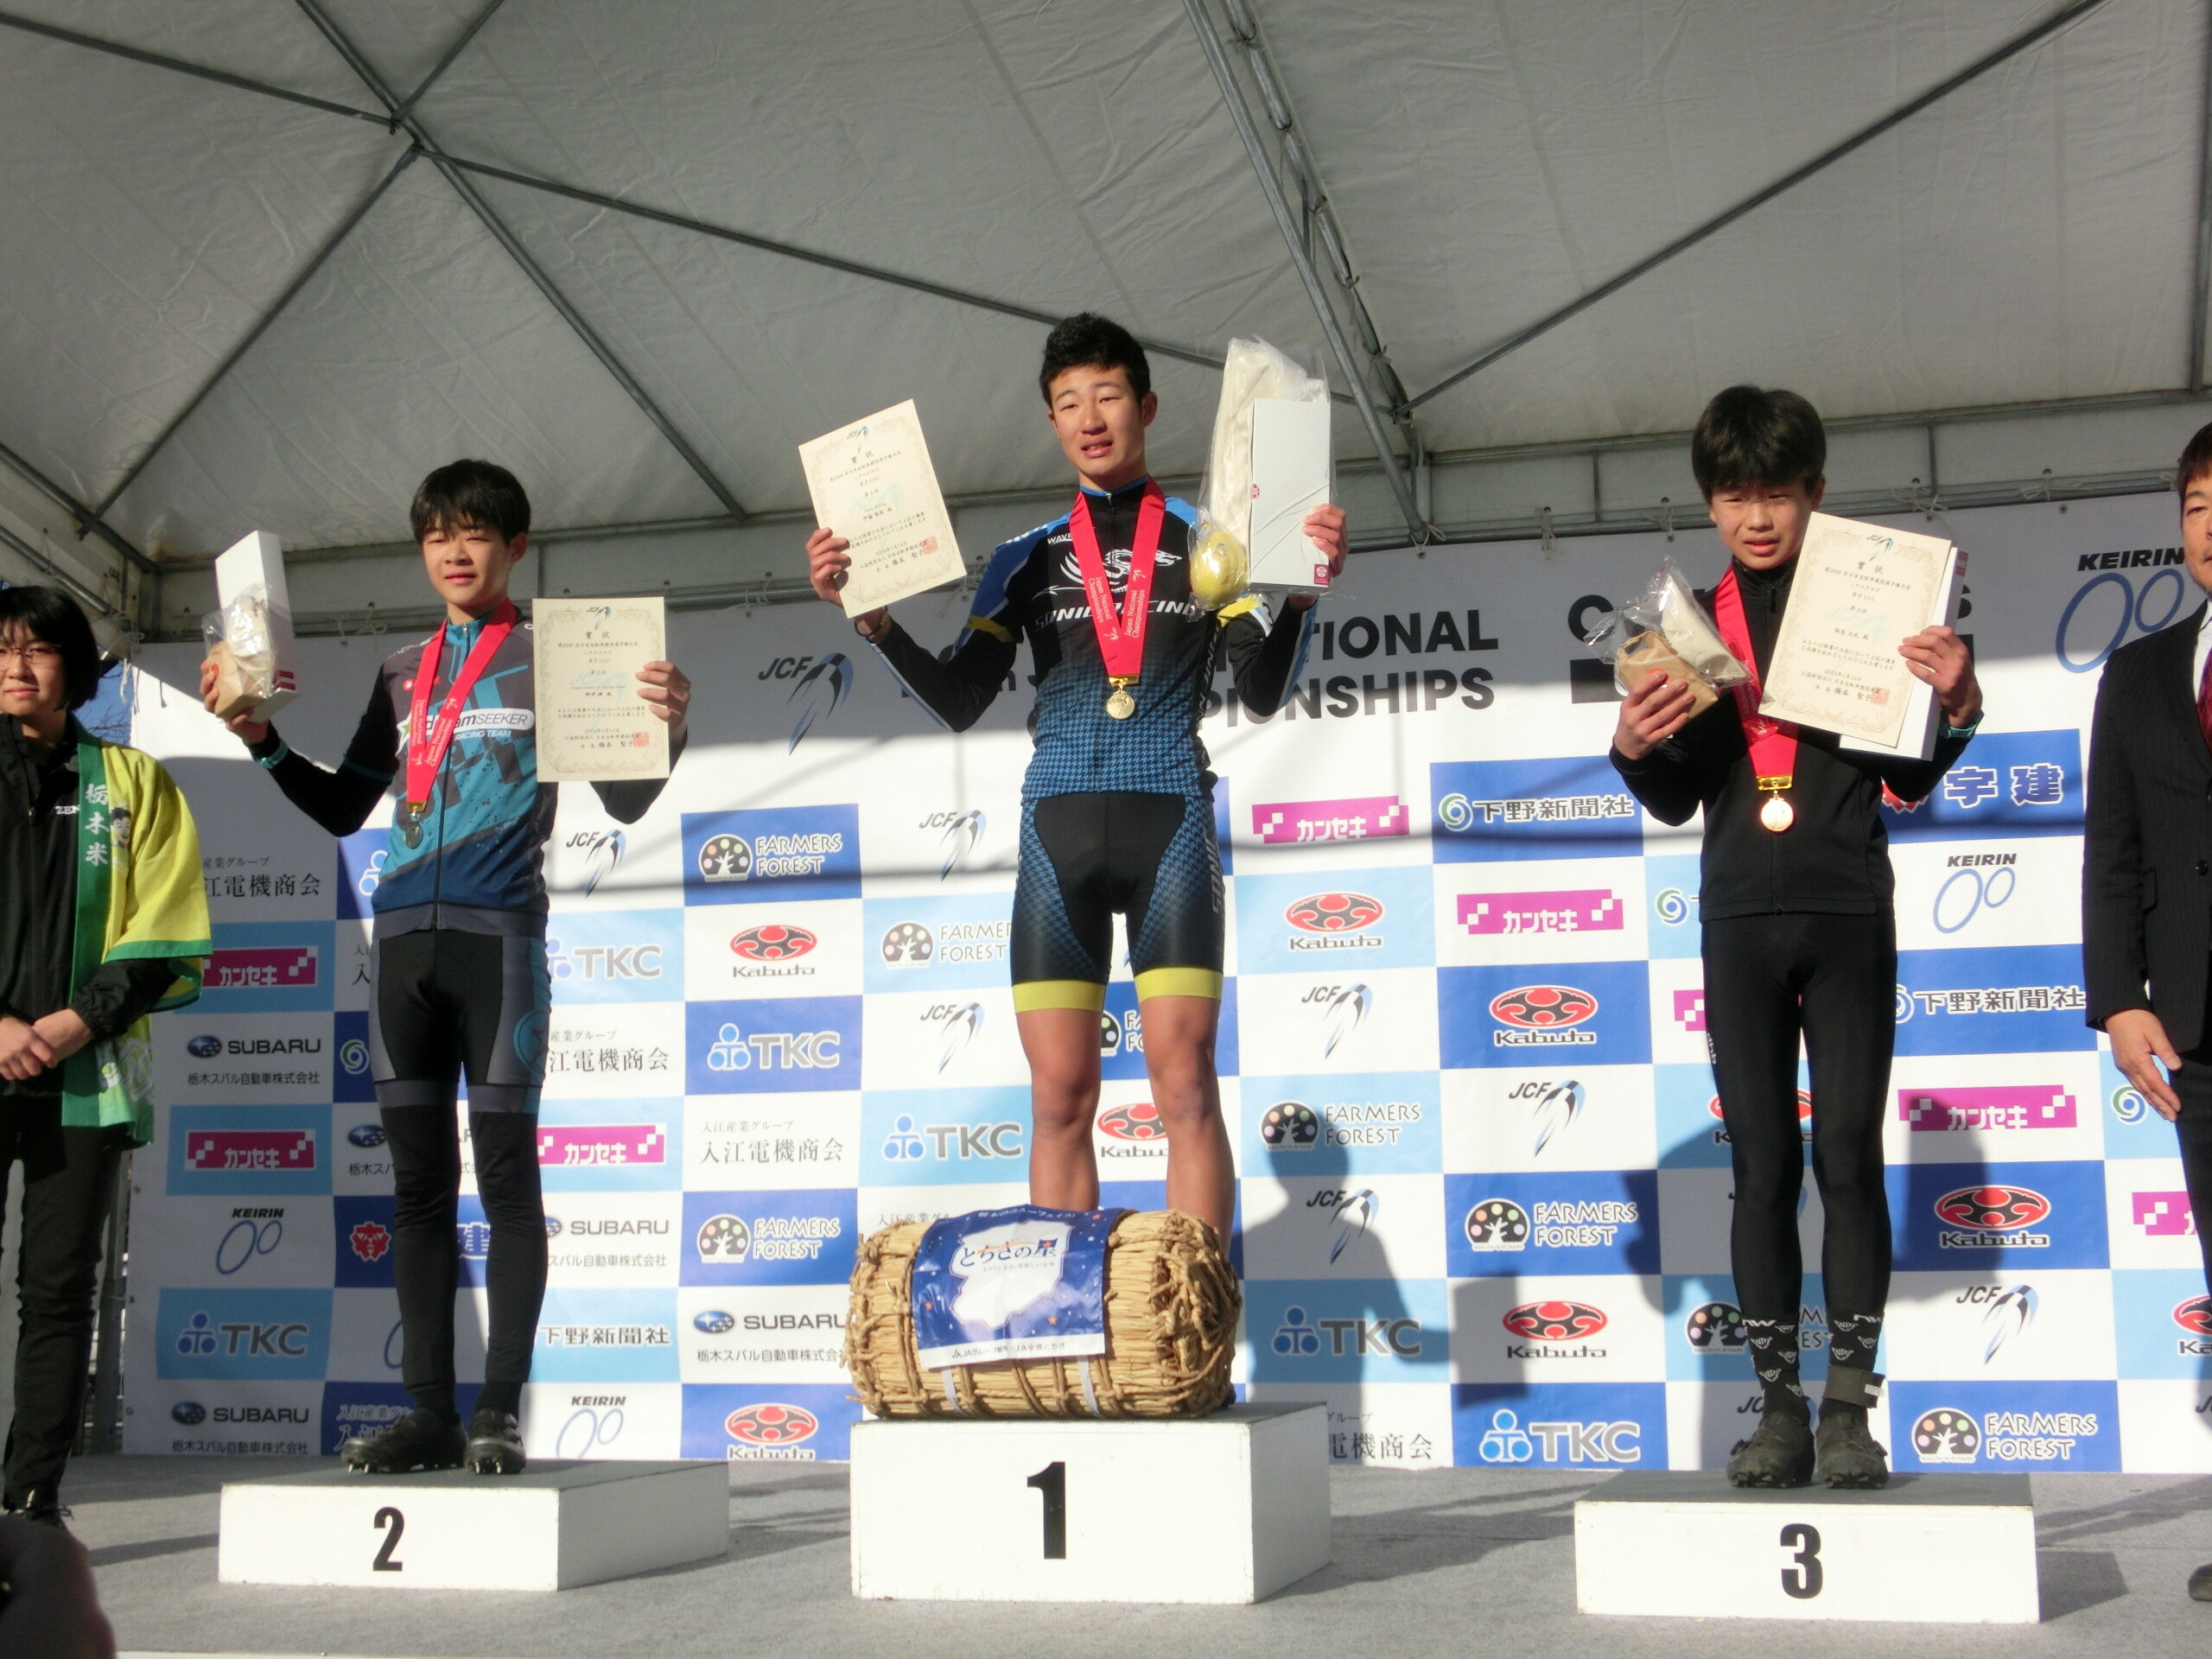 https://www.cyclocross.jp/news/CIMG8117.JPG